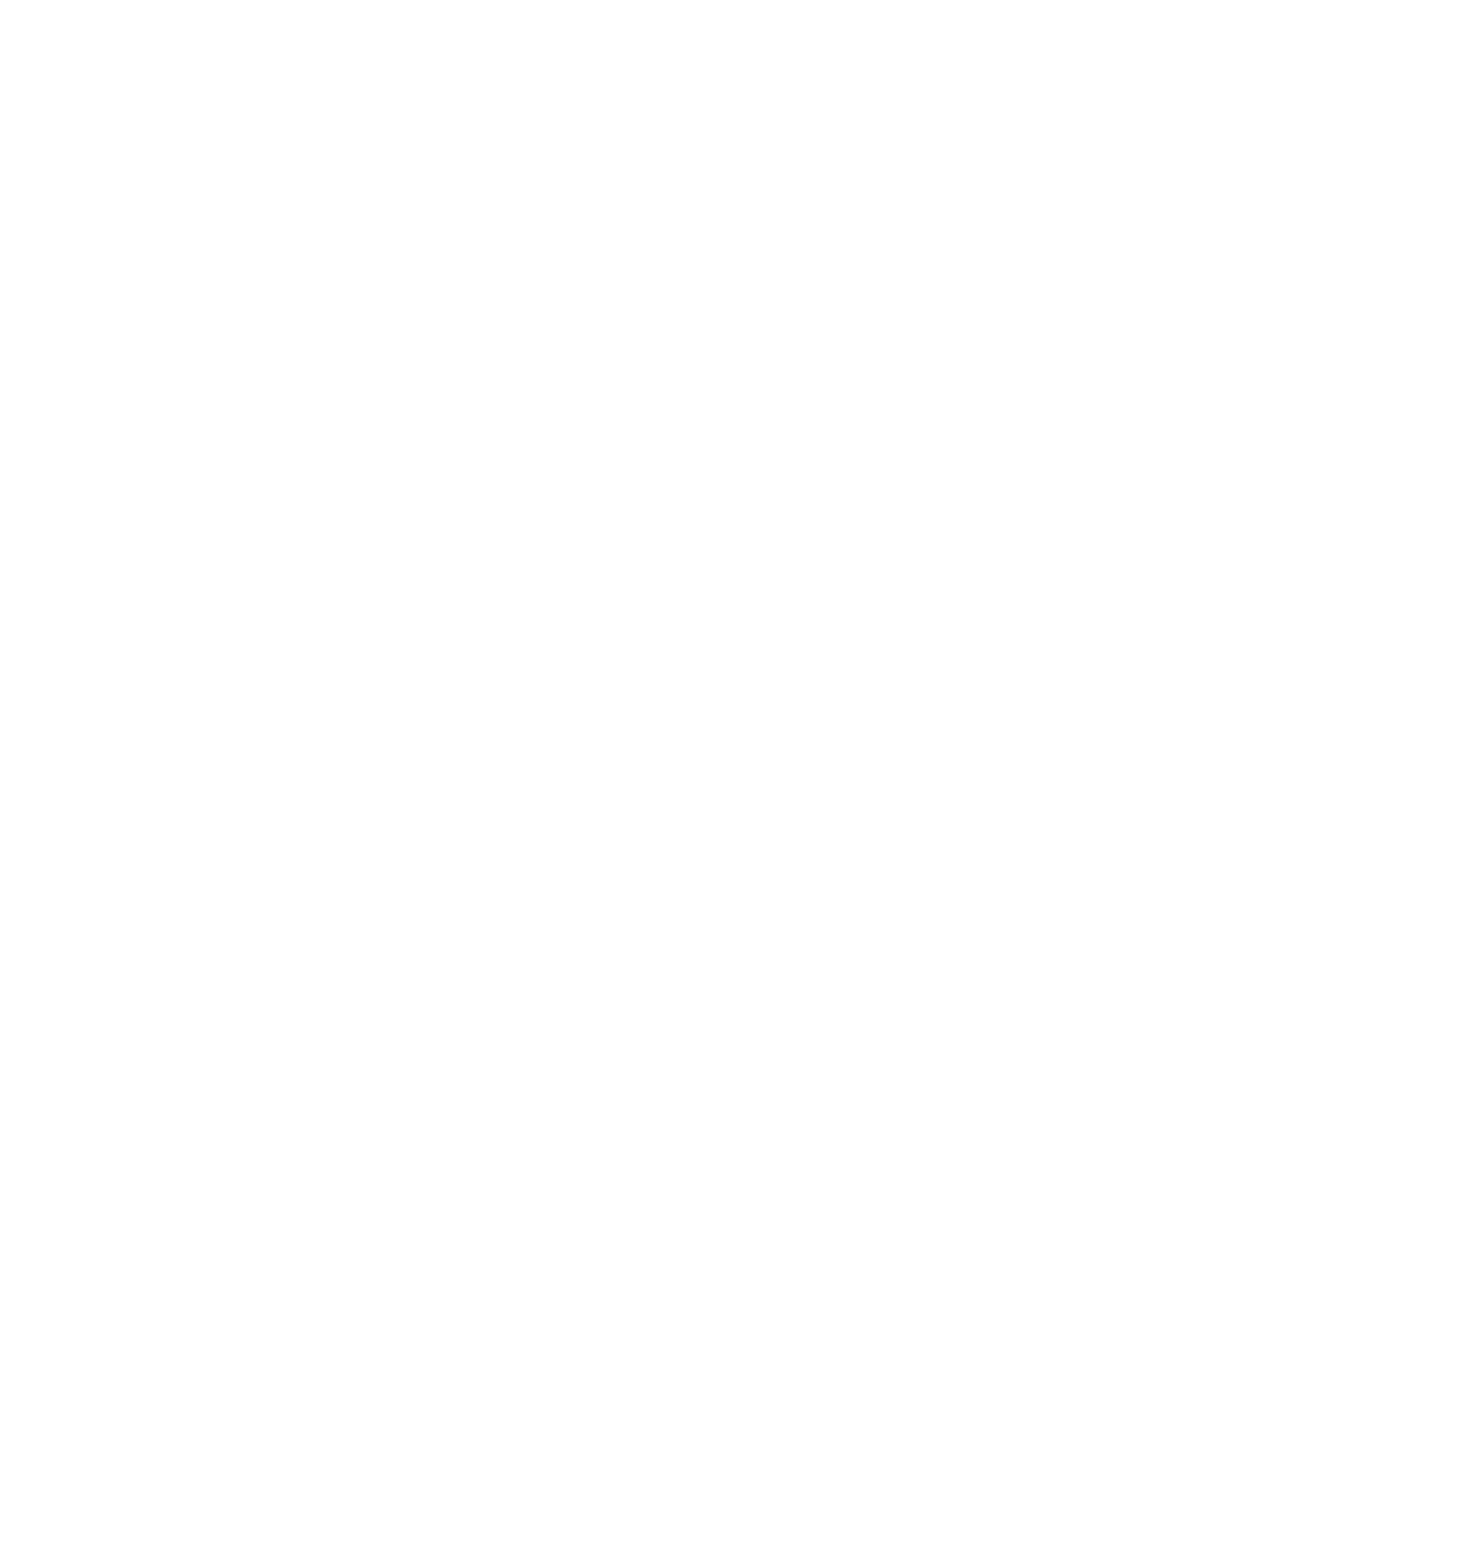 Inspira Technologies logo pour fonds sombres (PNG transparent)